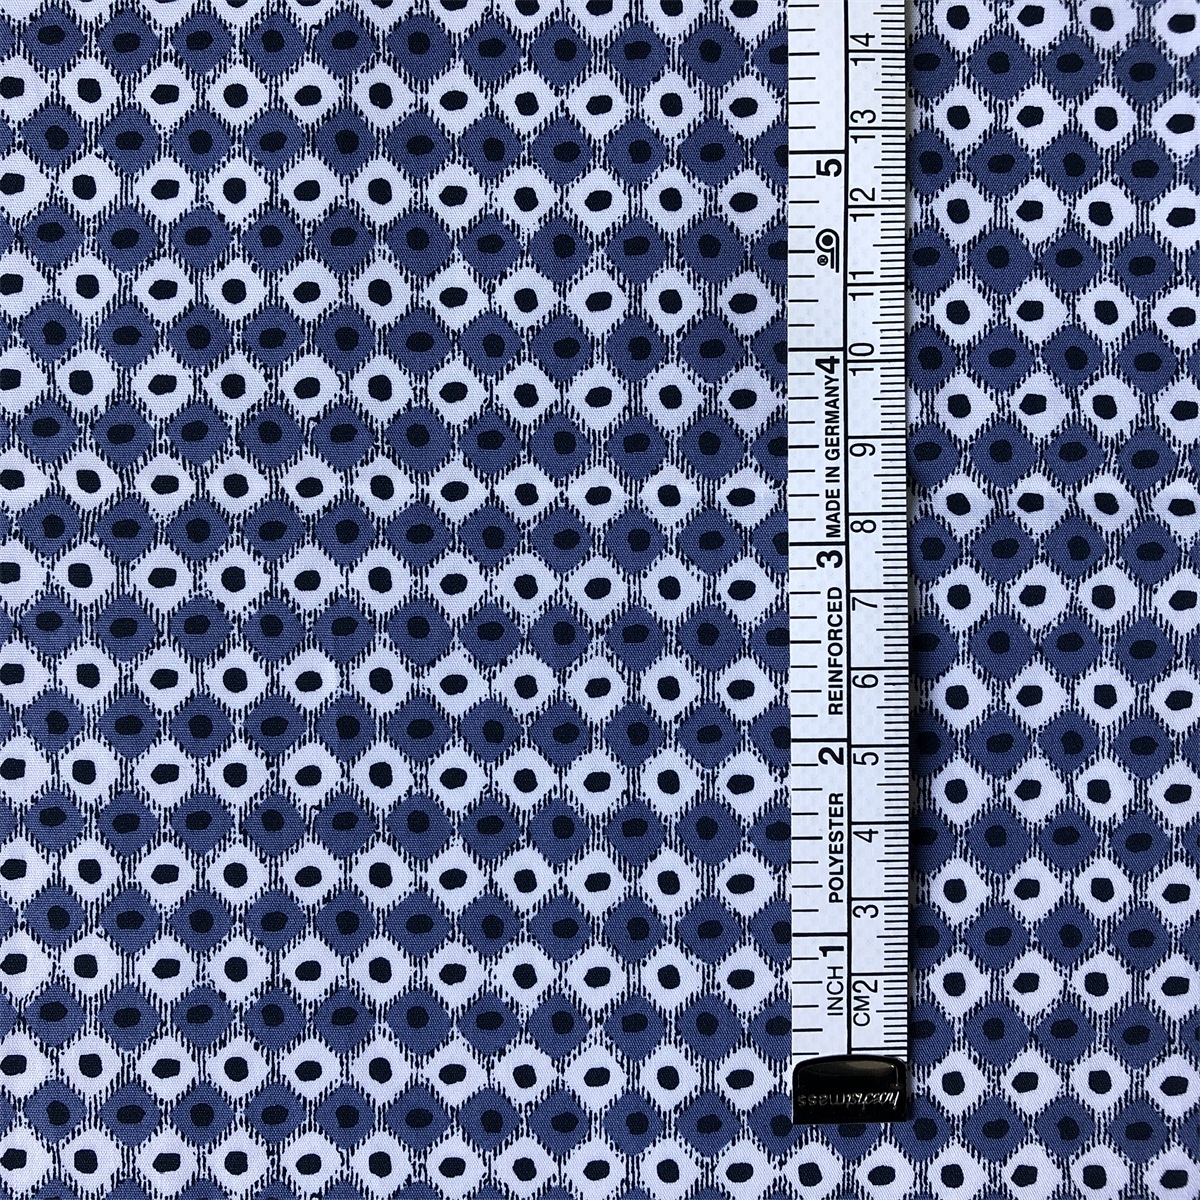 Sun-rising Textile Cotton fabric hot sale fashion design 100%cotton poplin printed fabric for men's casual shirts